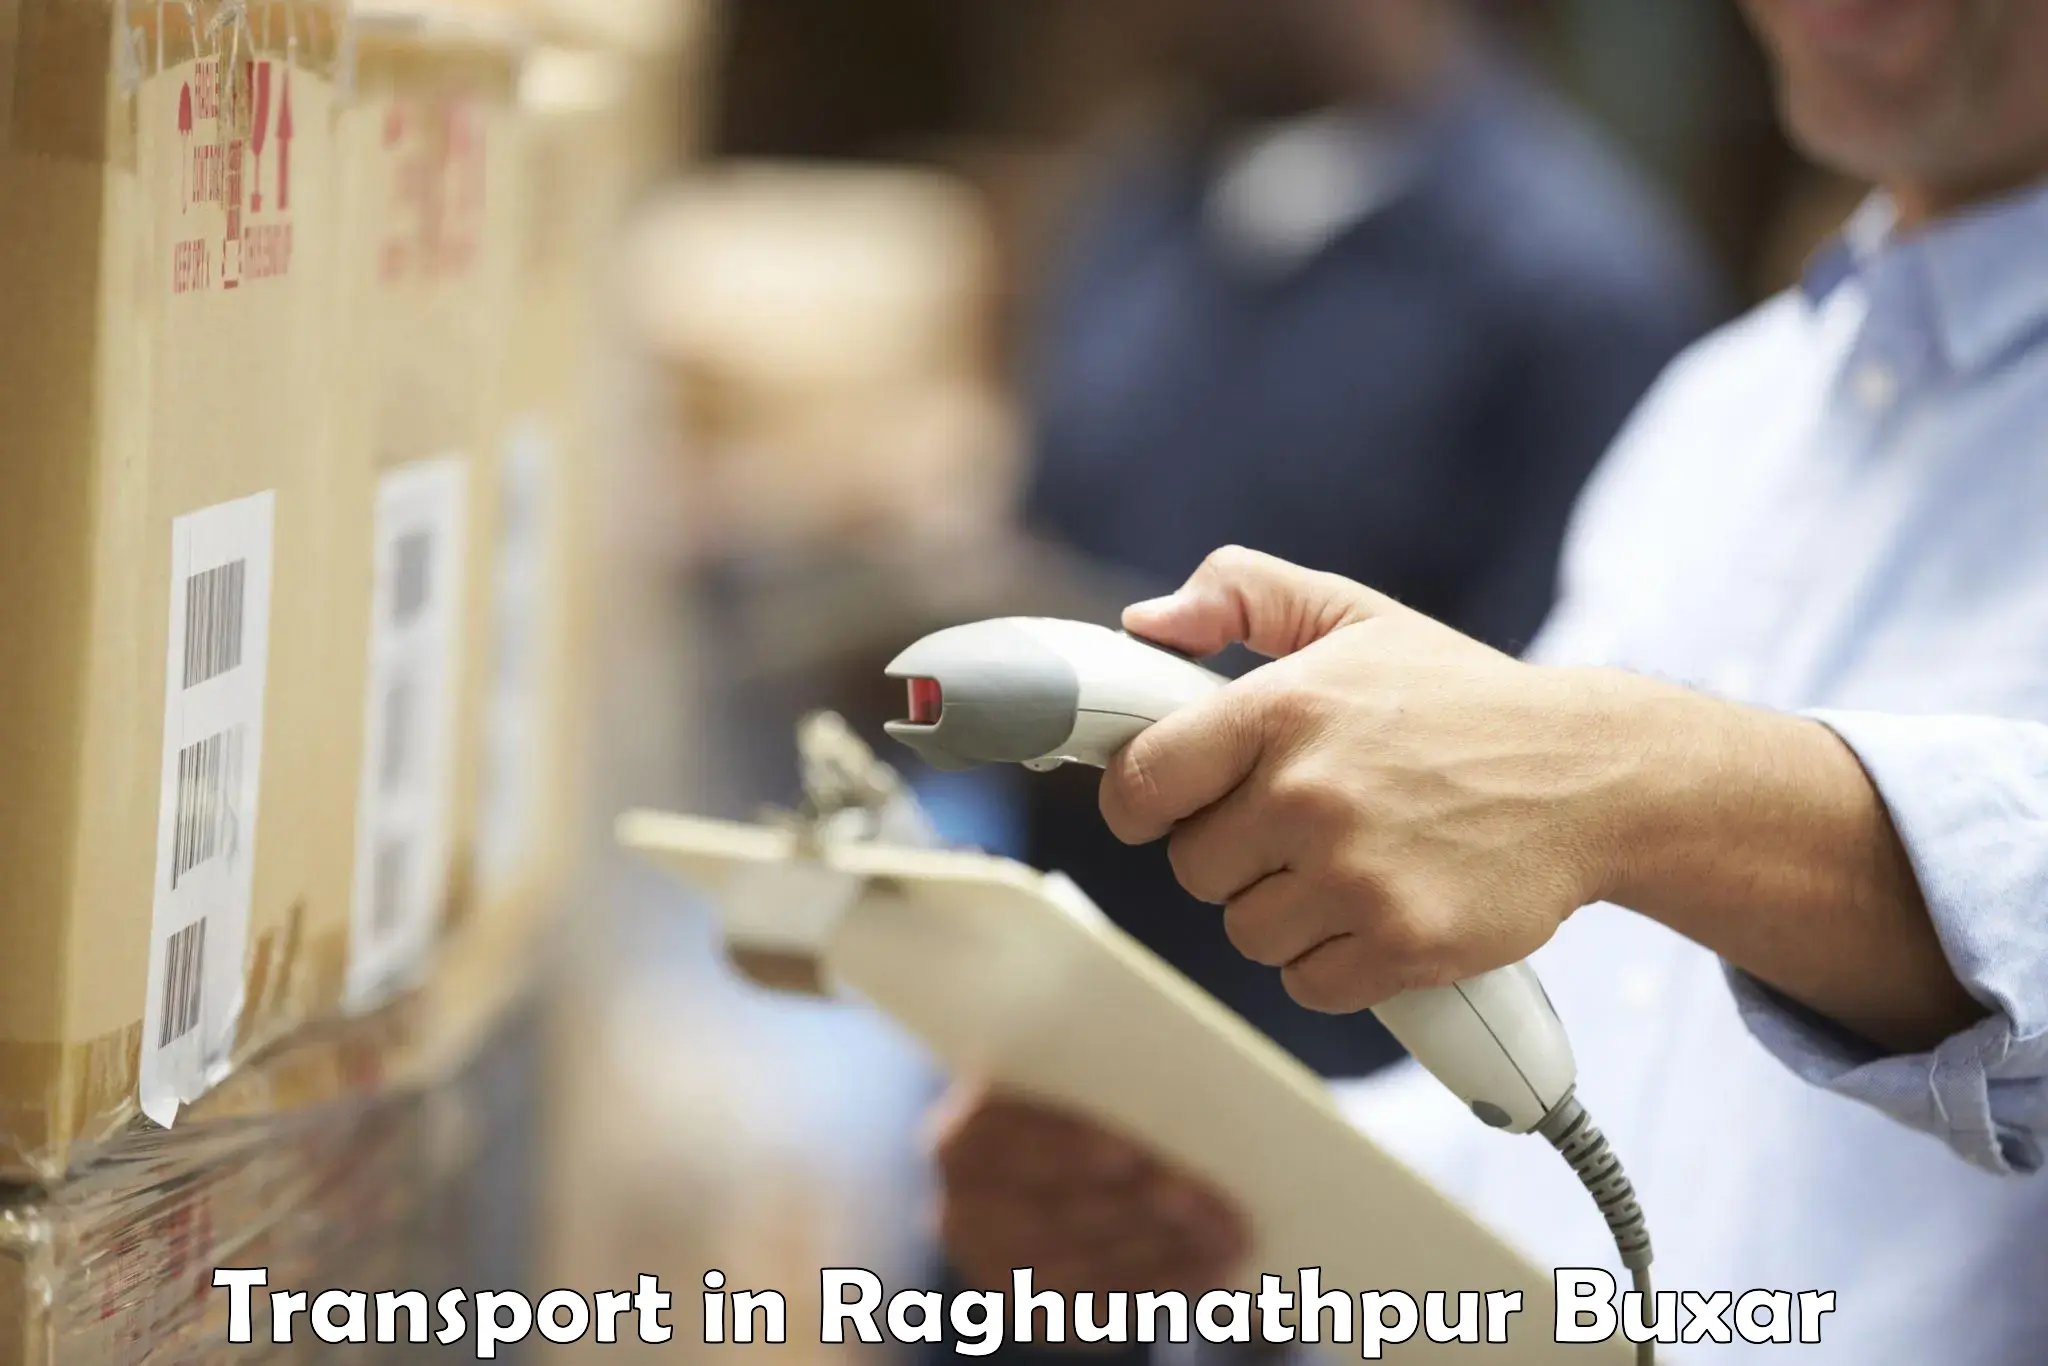 Transport shared services in Raghunathpur Buxar